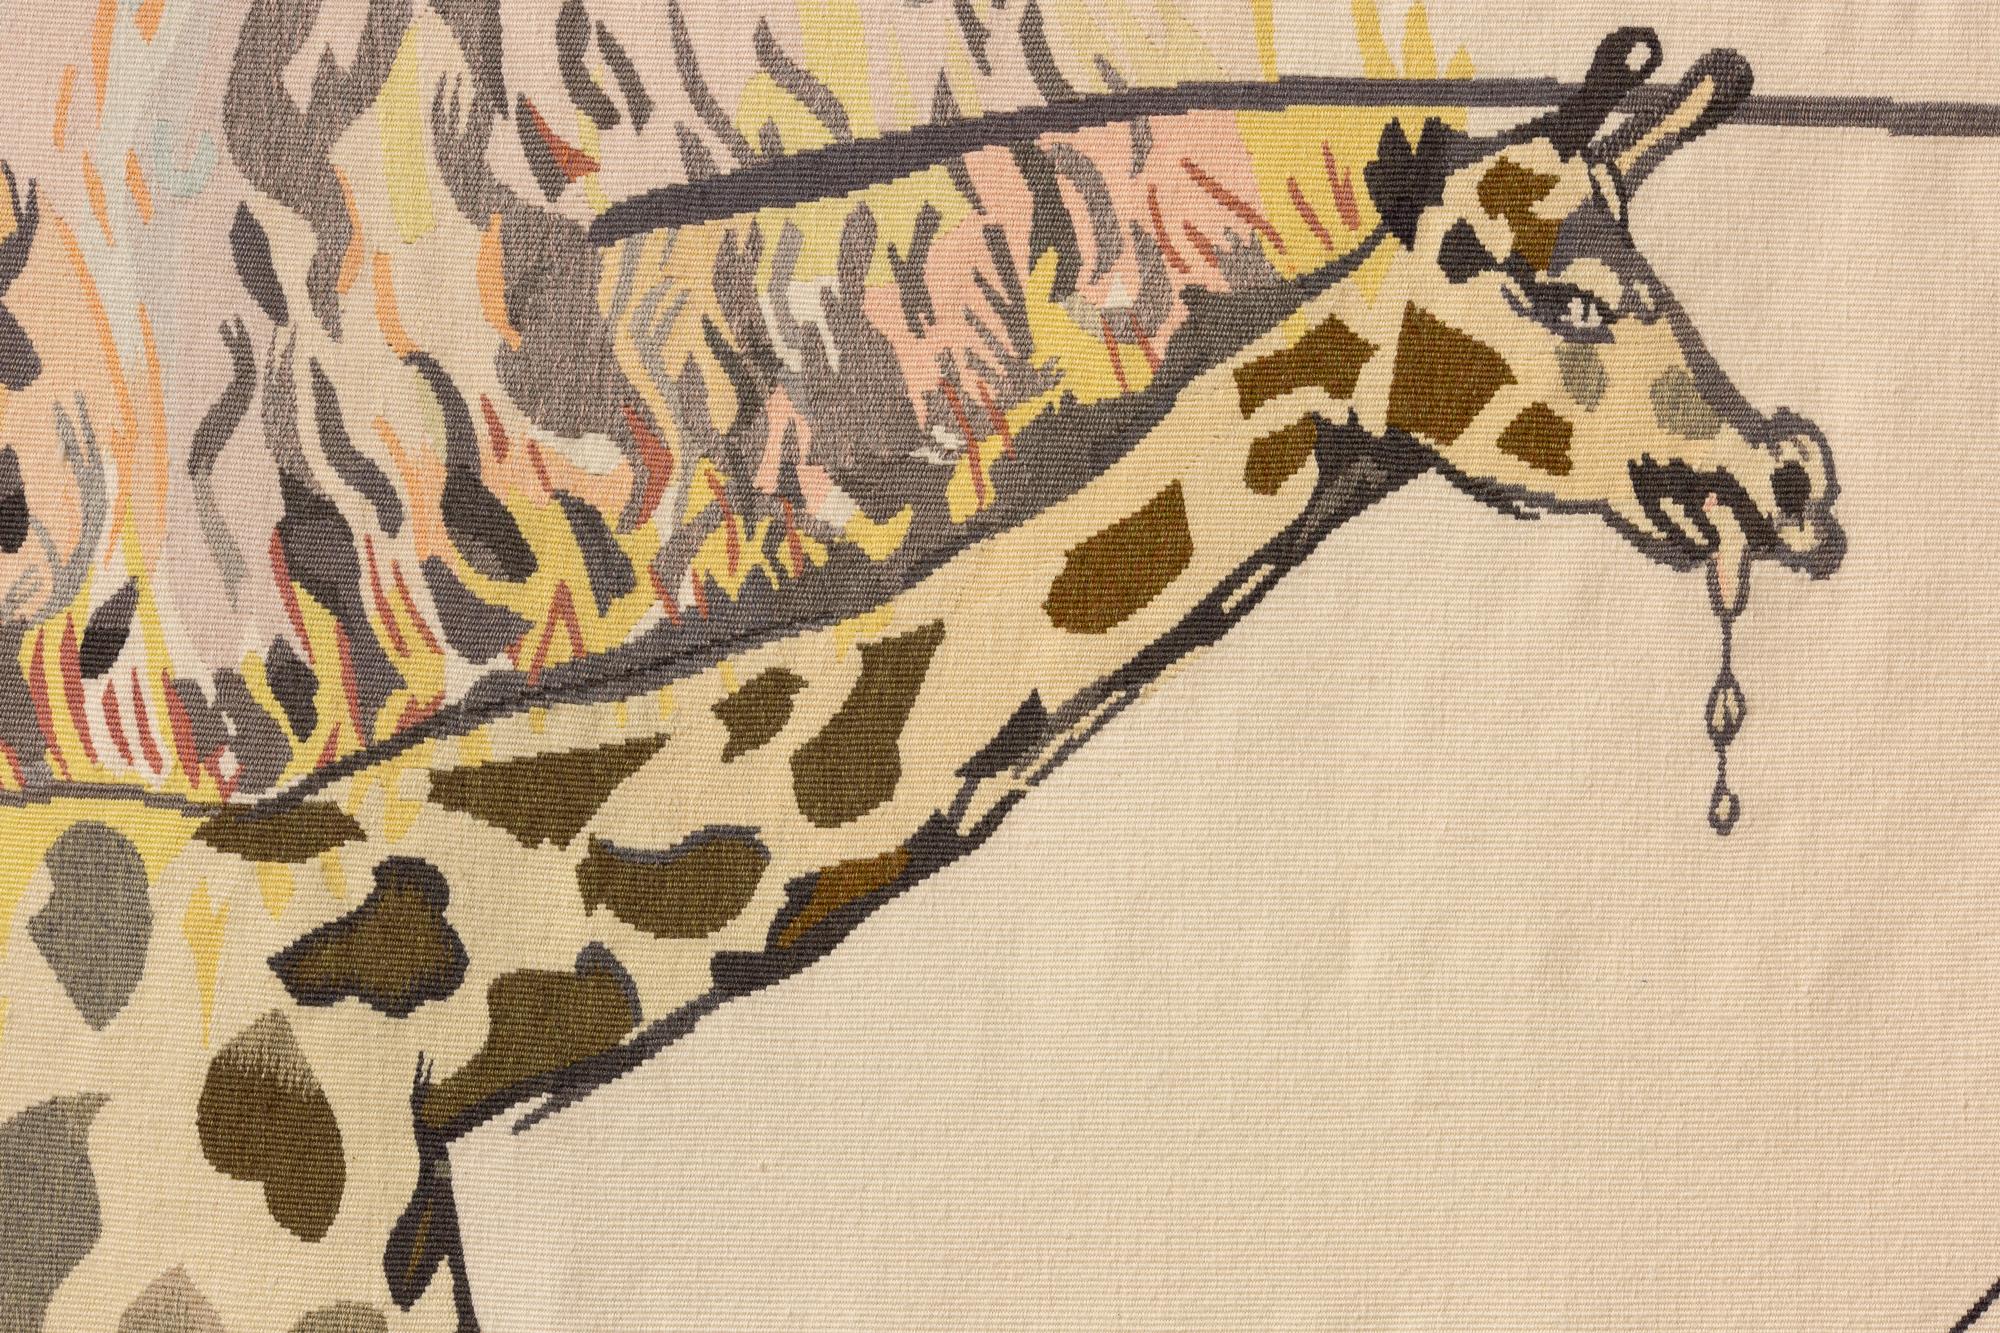 Burning Giraffe - Surrealist Print by Salvador Dalí